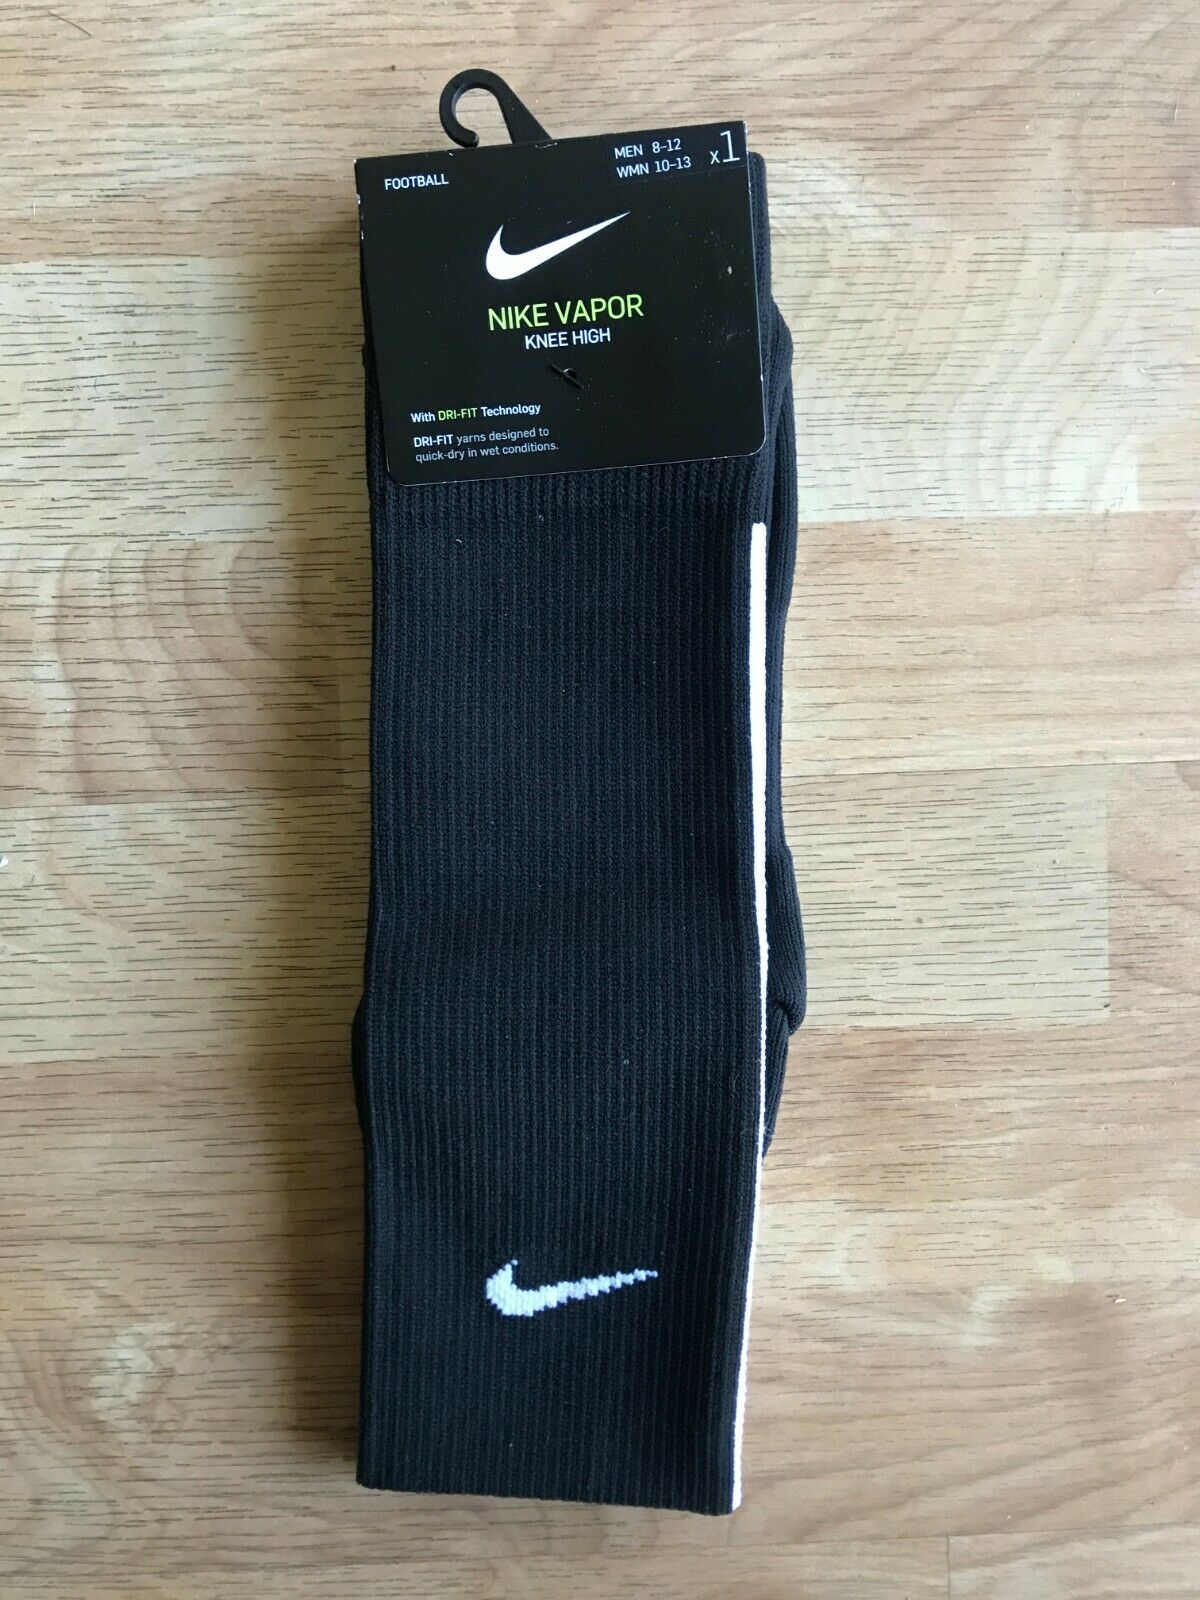 Nike Vapor Knee High Football Socks SX5732